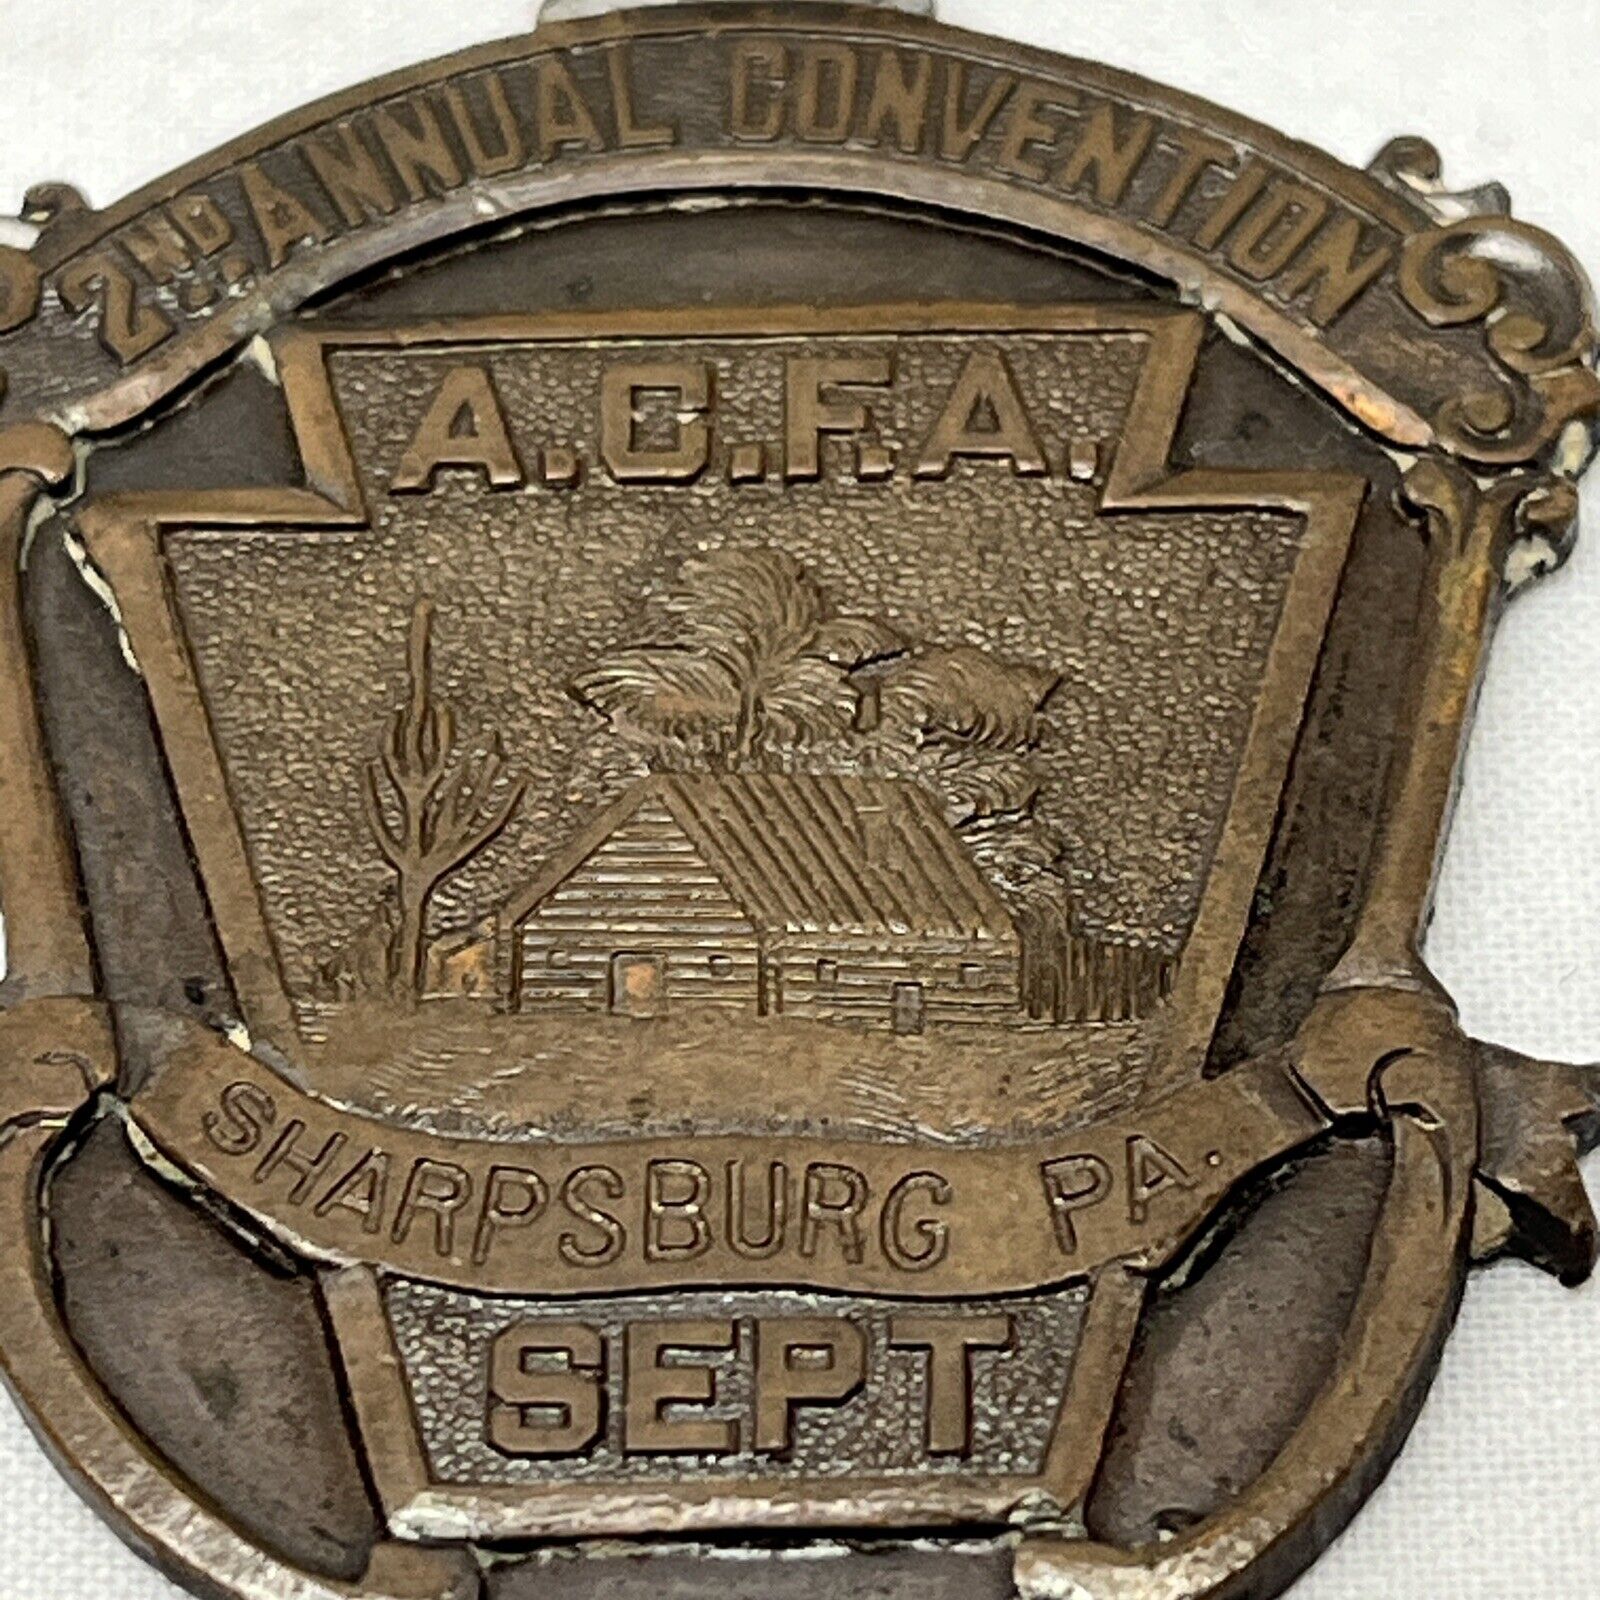 Sharpsburg PA Fireman Souvenir 1895 2nd Convention Medal Antique